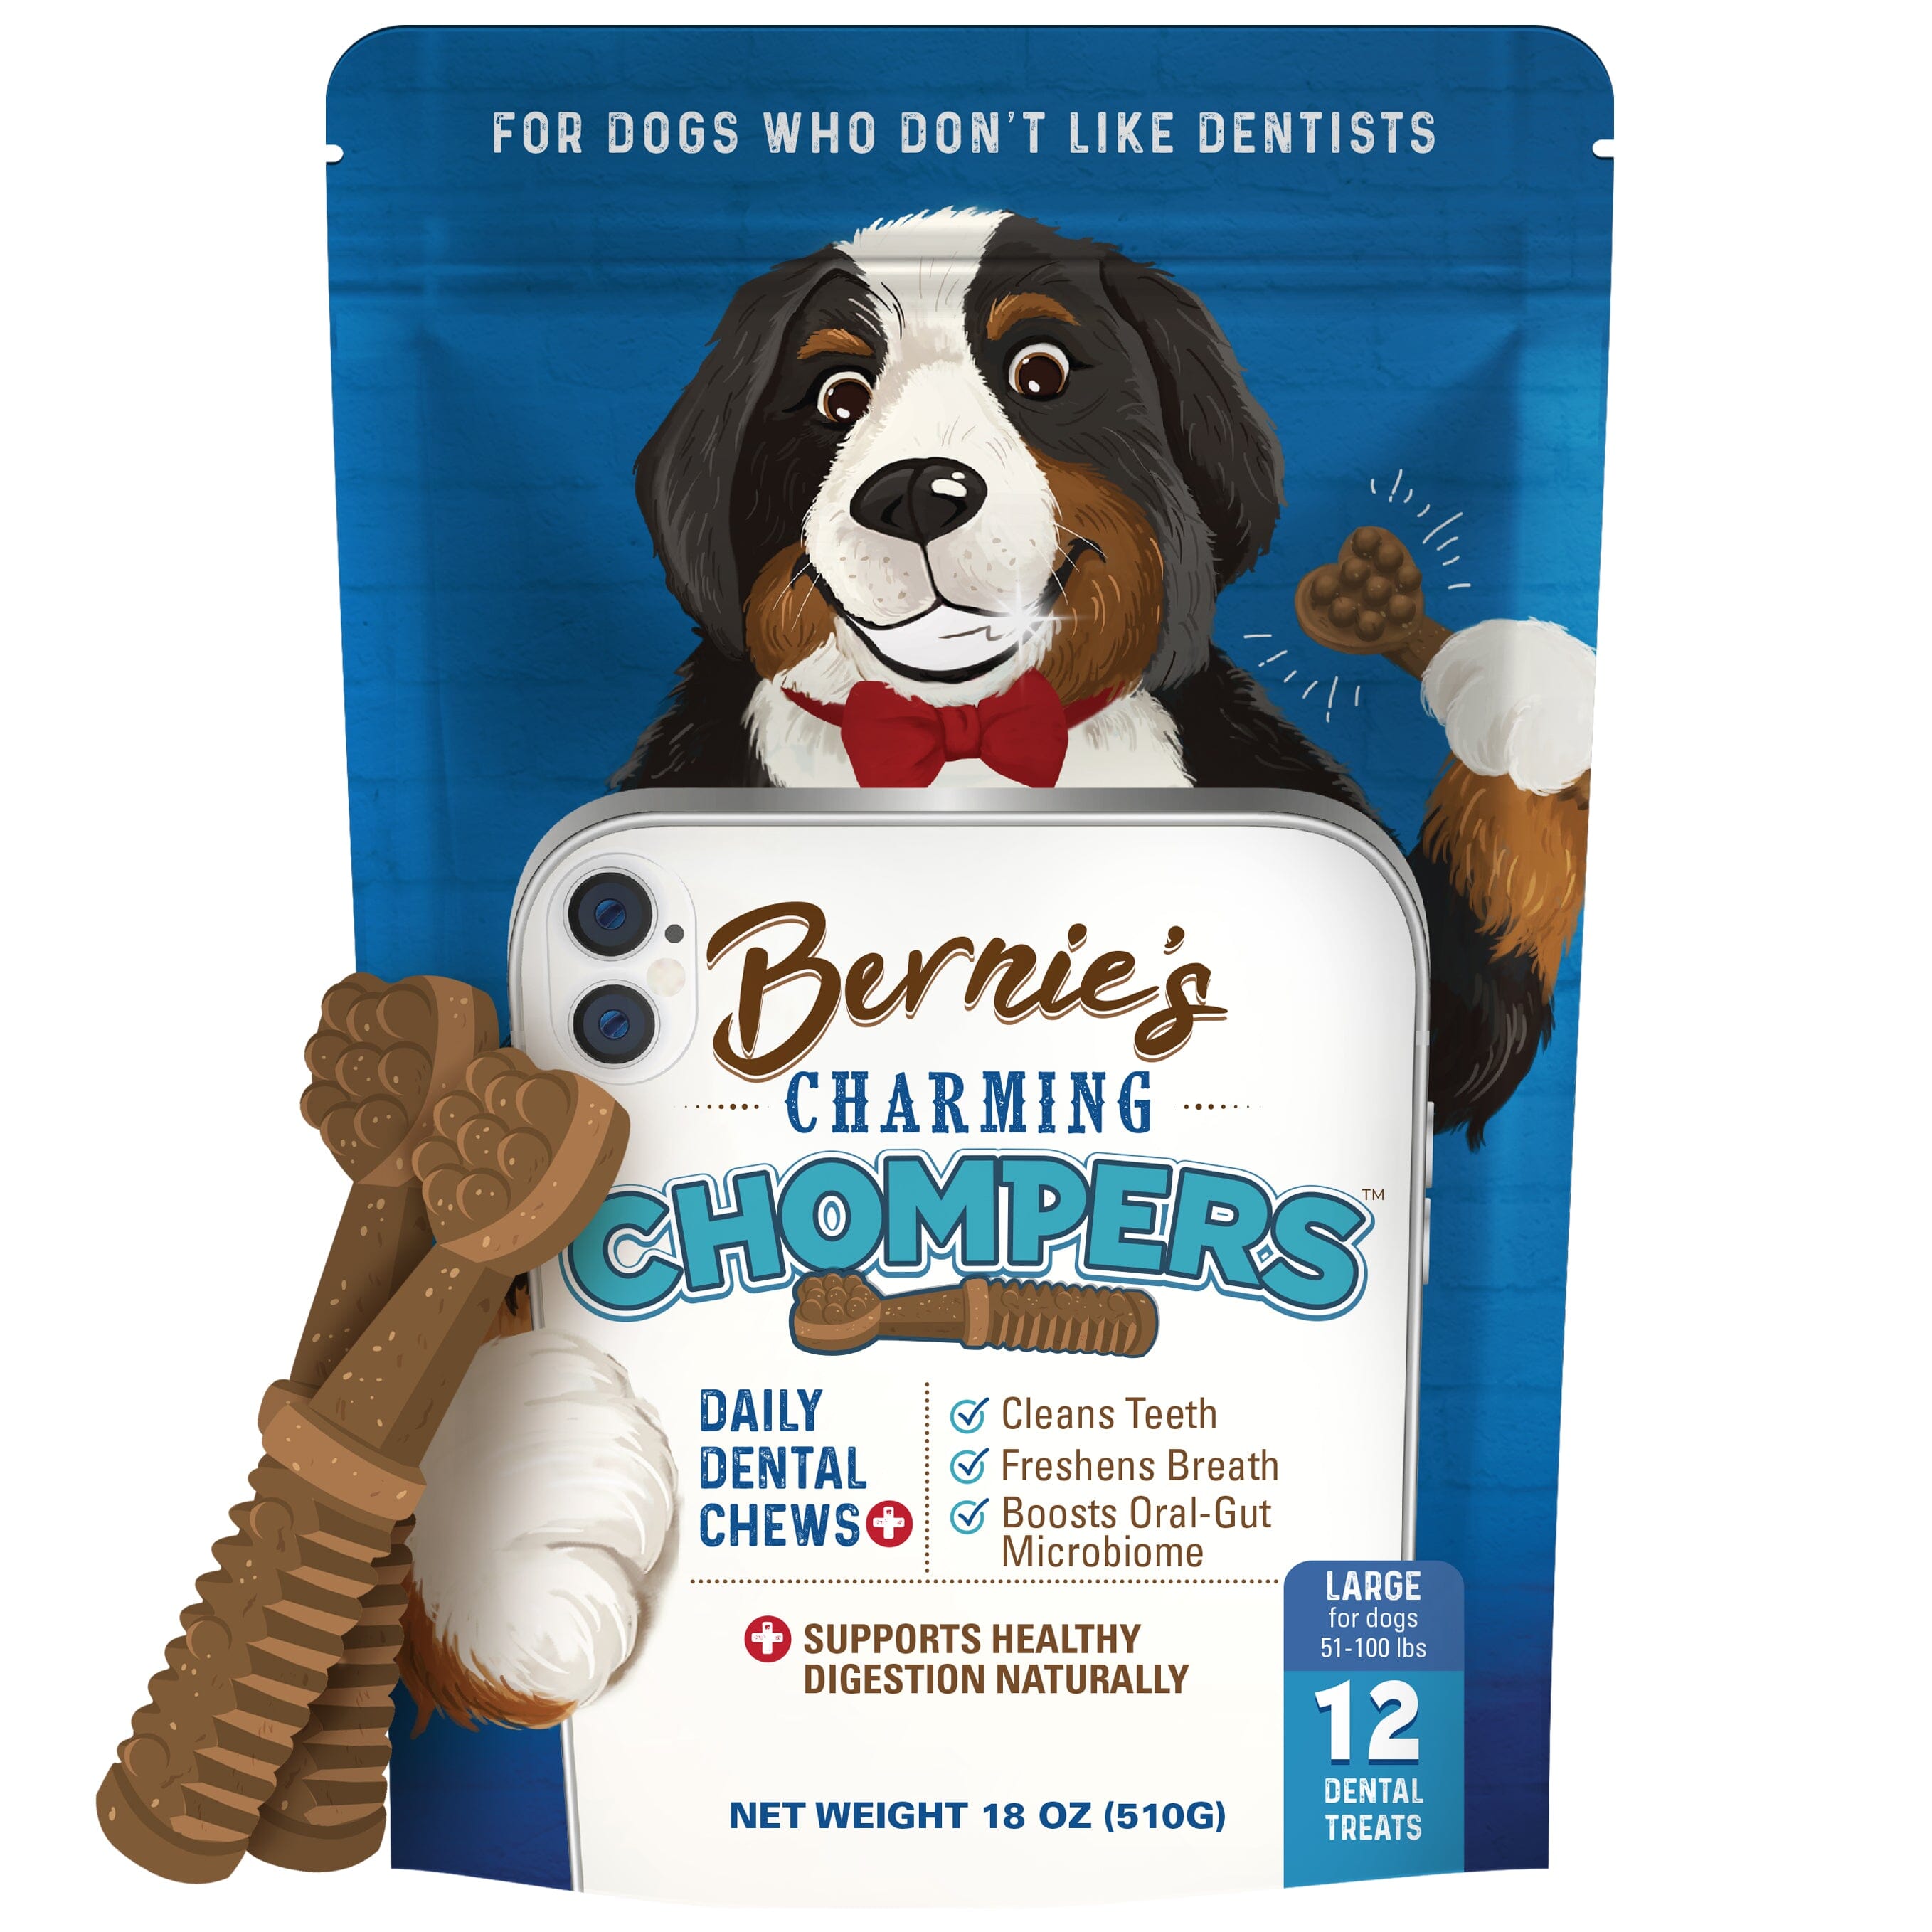 Bernie's Charming Chompers Digestive Supplement Bernie's Best Large Dogs (51-100 lb) 18 oz - 12 Count 